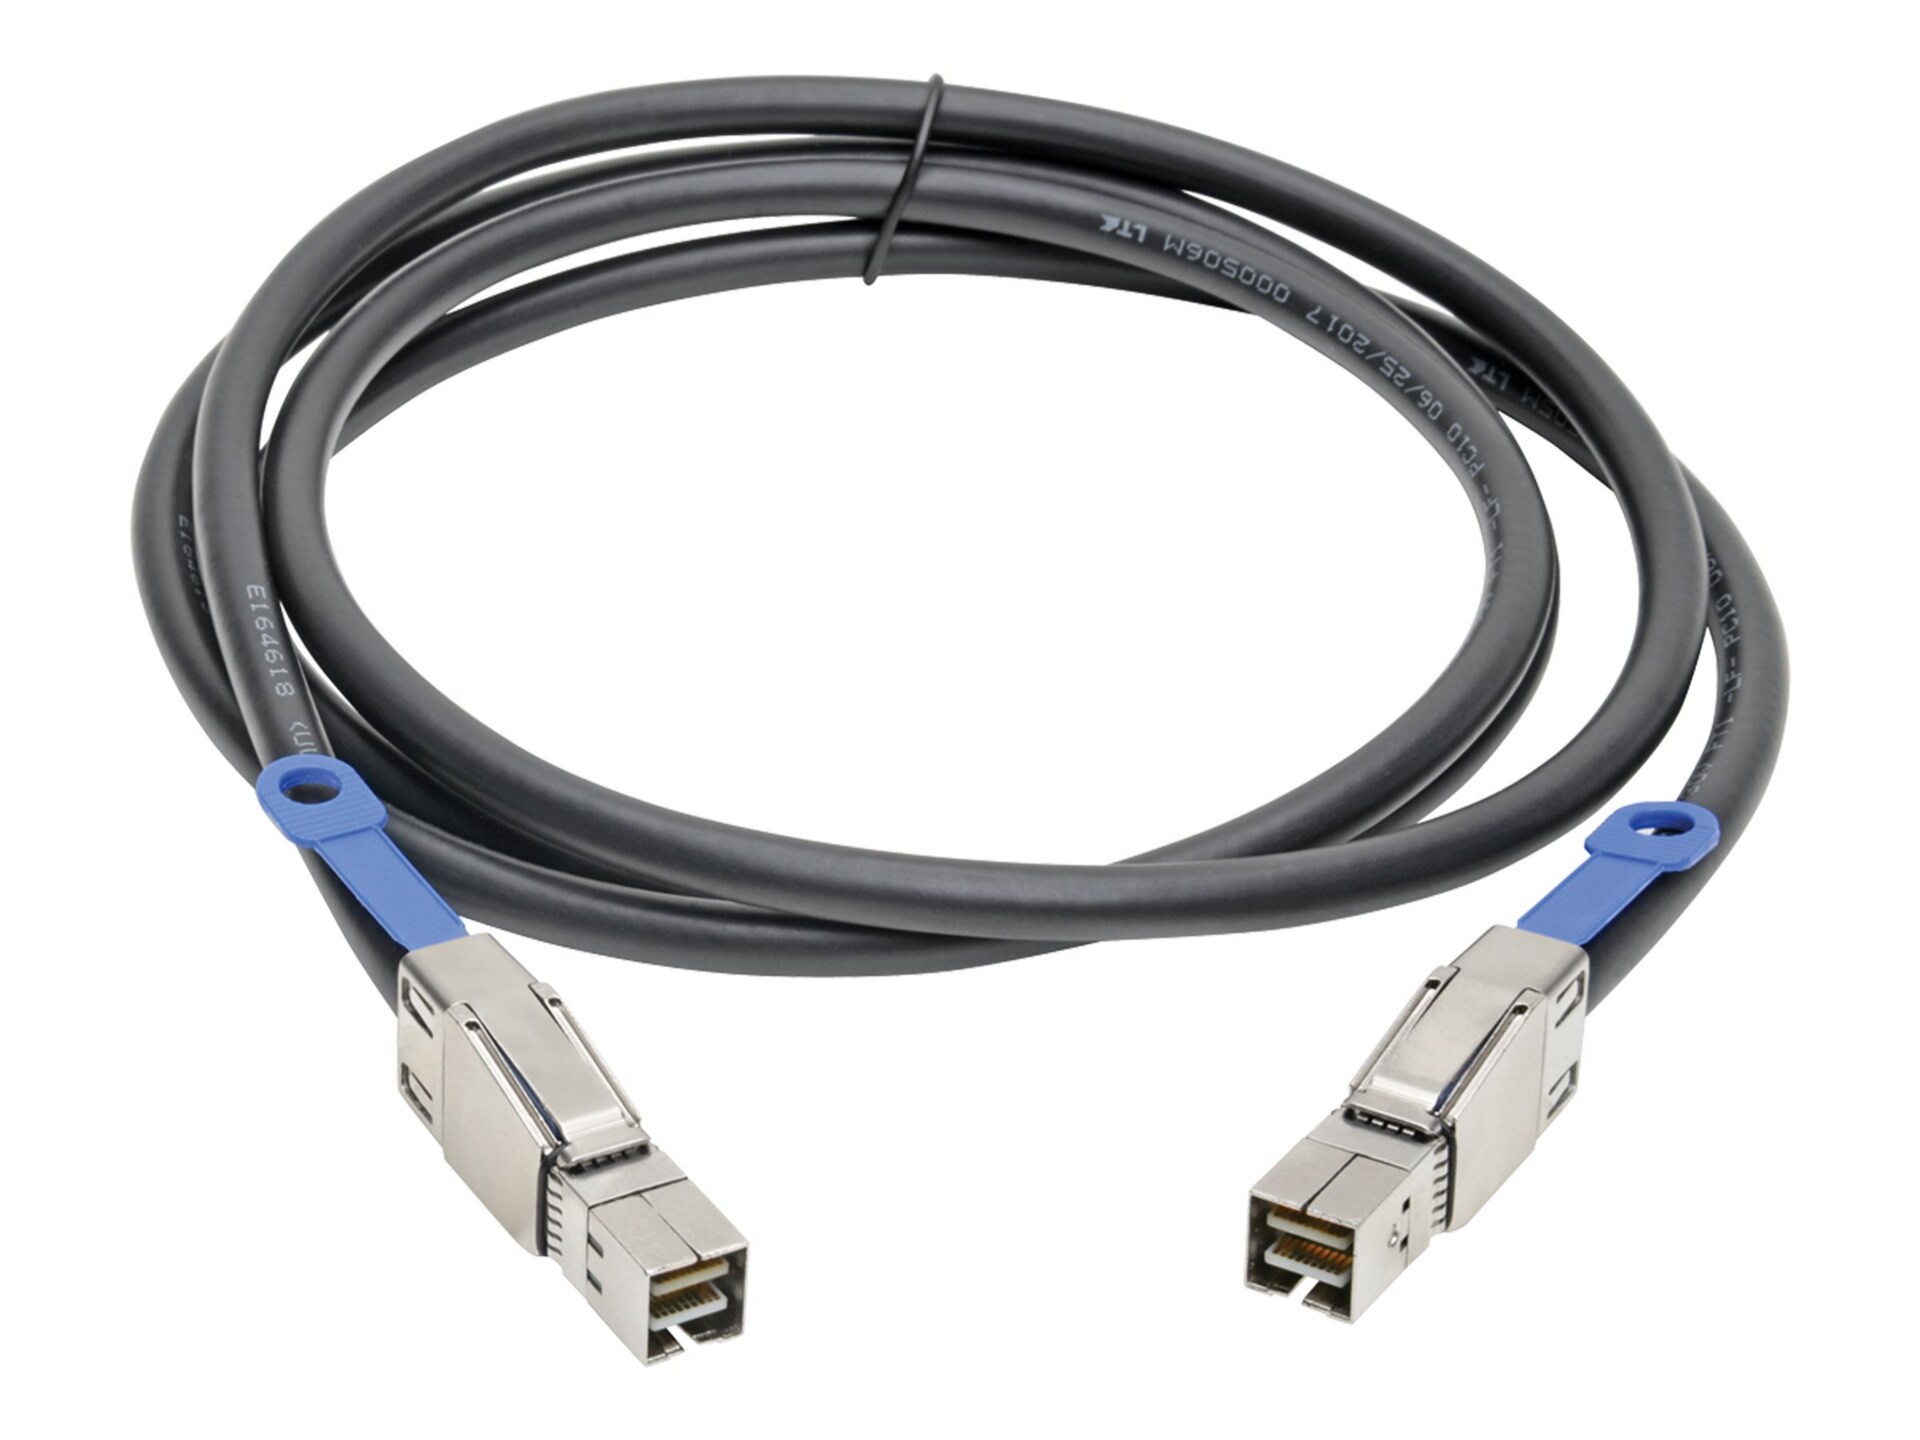 Tripp Lite Mini Sas External Hd Cable Sff 8644 To Sff 8644 12gbps 2m 6 6ft S528 02m Scsi Ide Floppy Cables Cdw Com